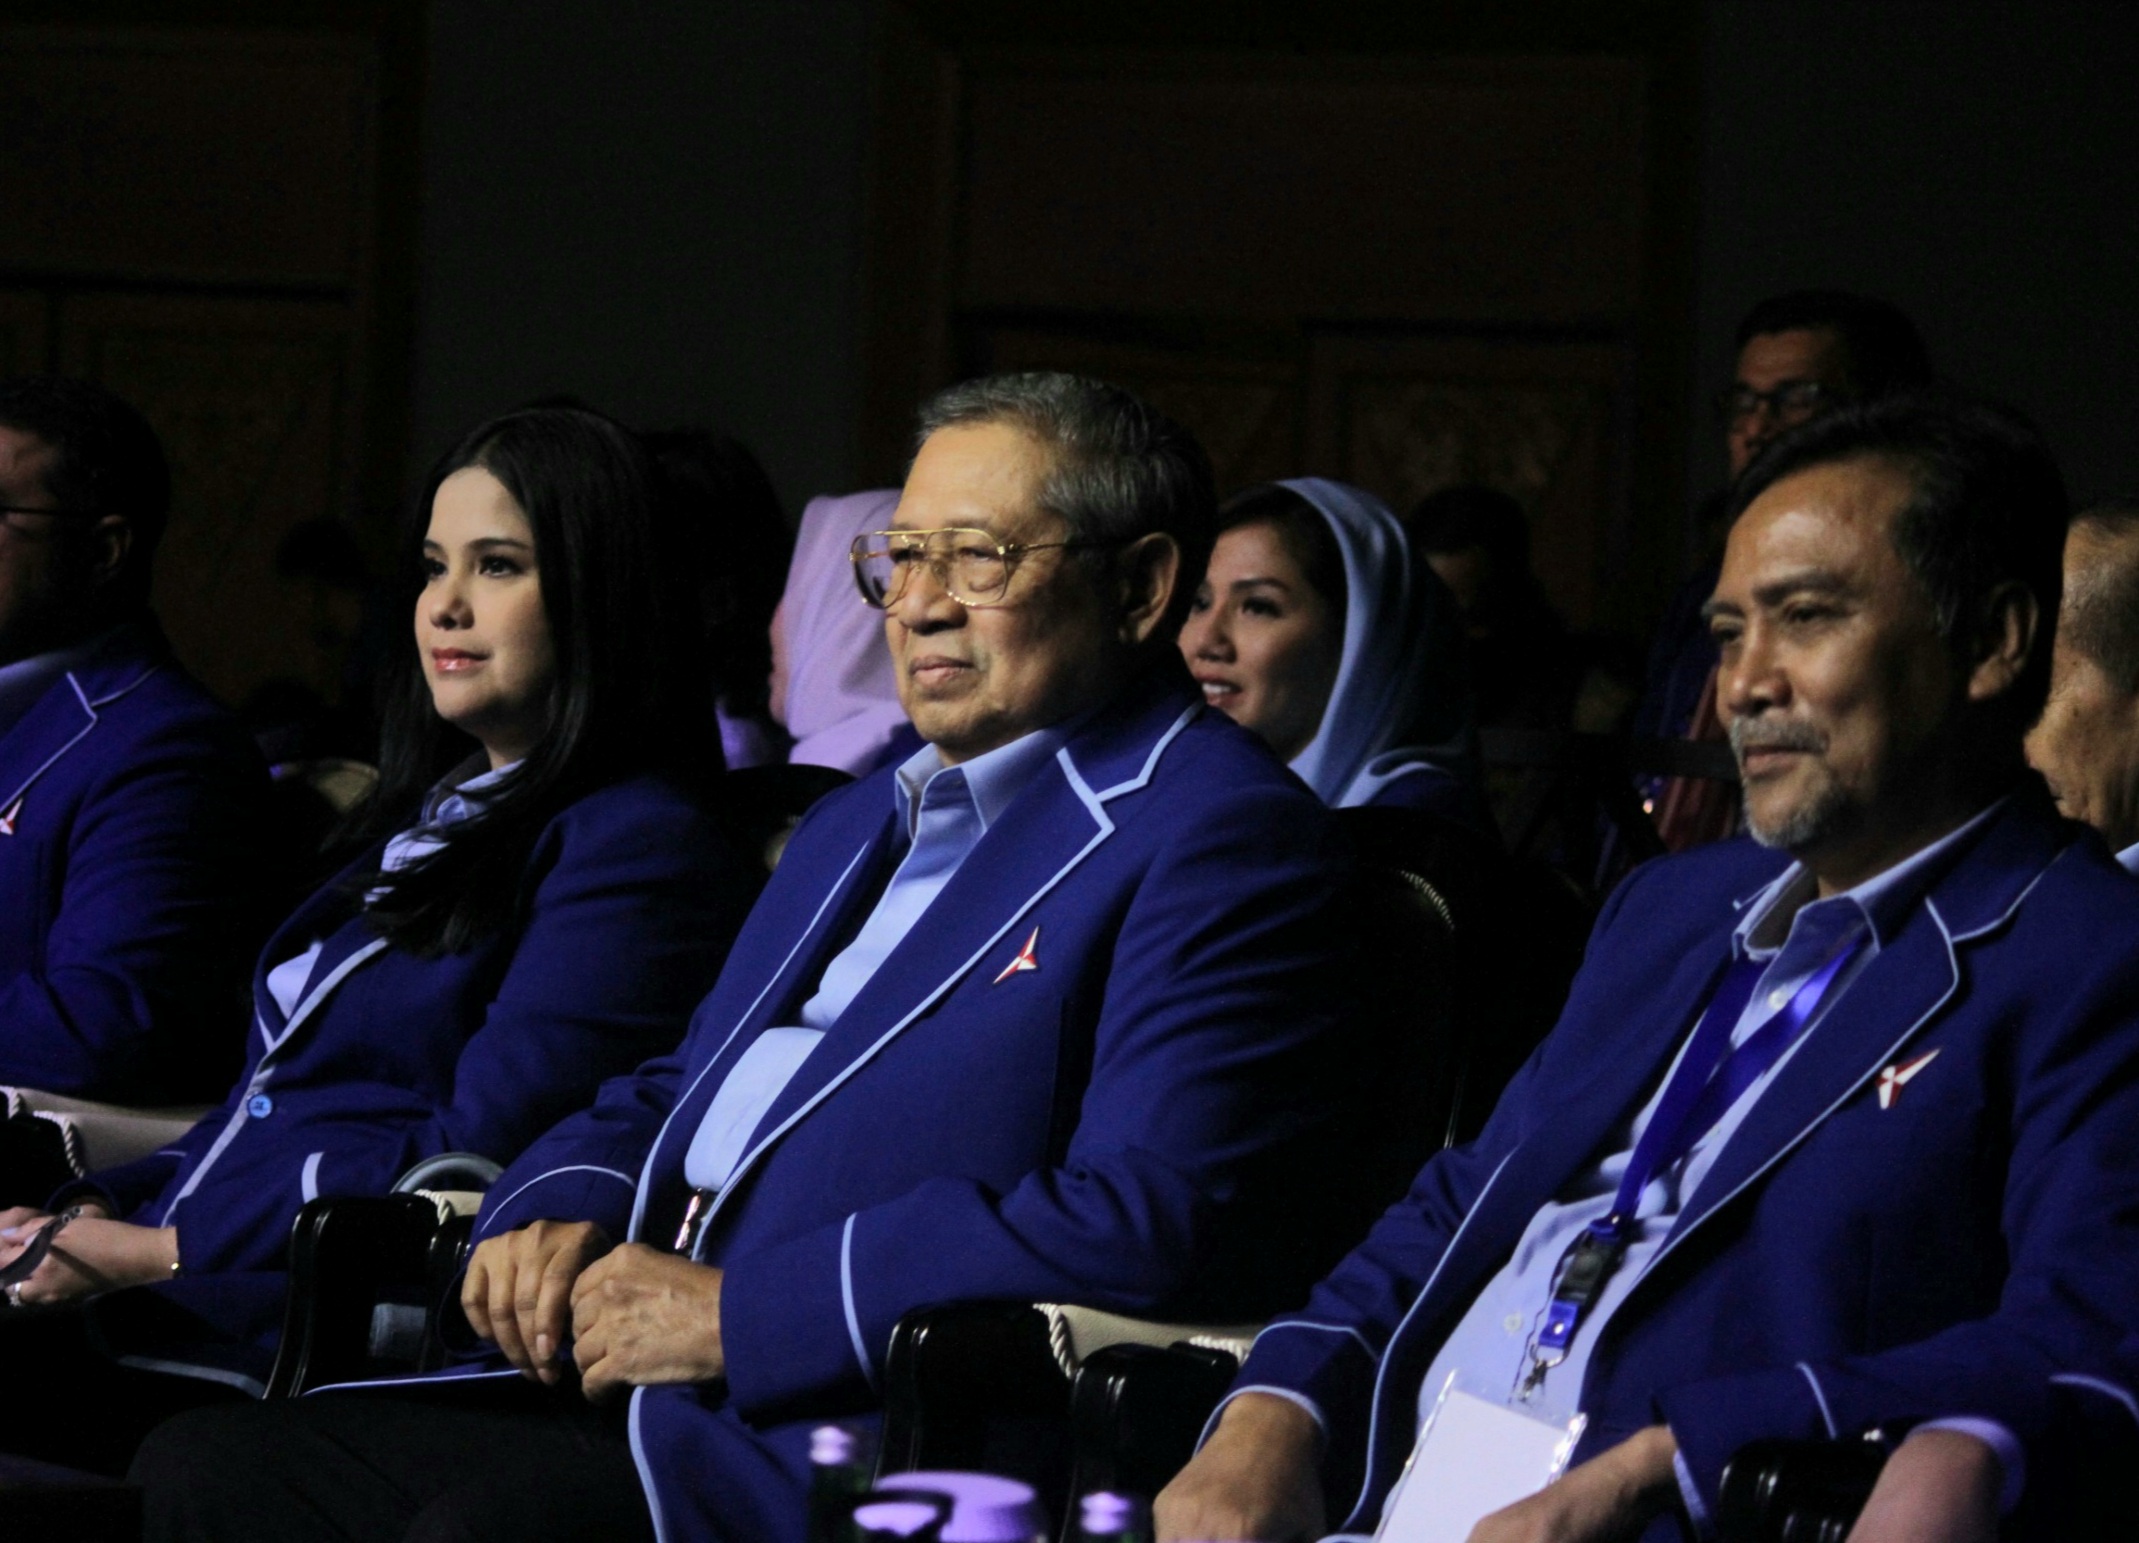 Ketua Umum Partai Demokrat Agus Harimurti Yudhoyono saat memberikan pidato kebangsaan (Ashar/SinPo.id)